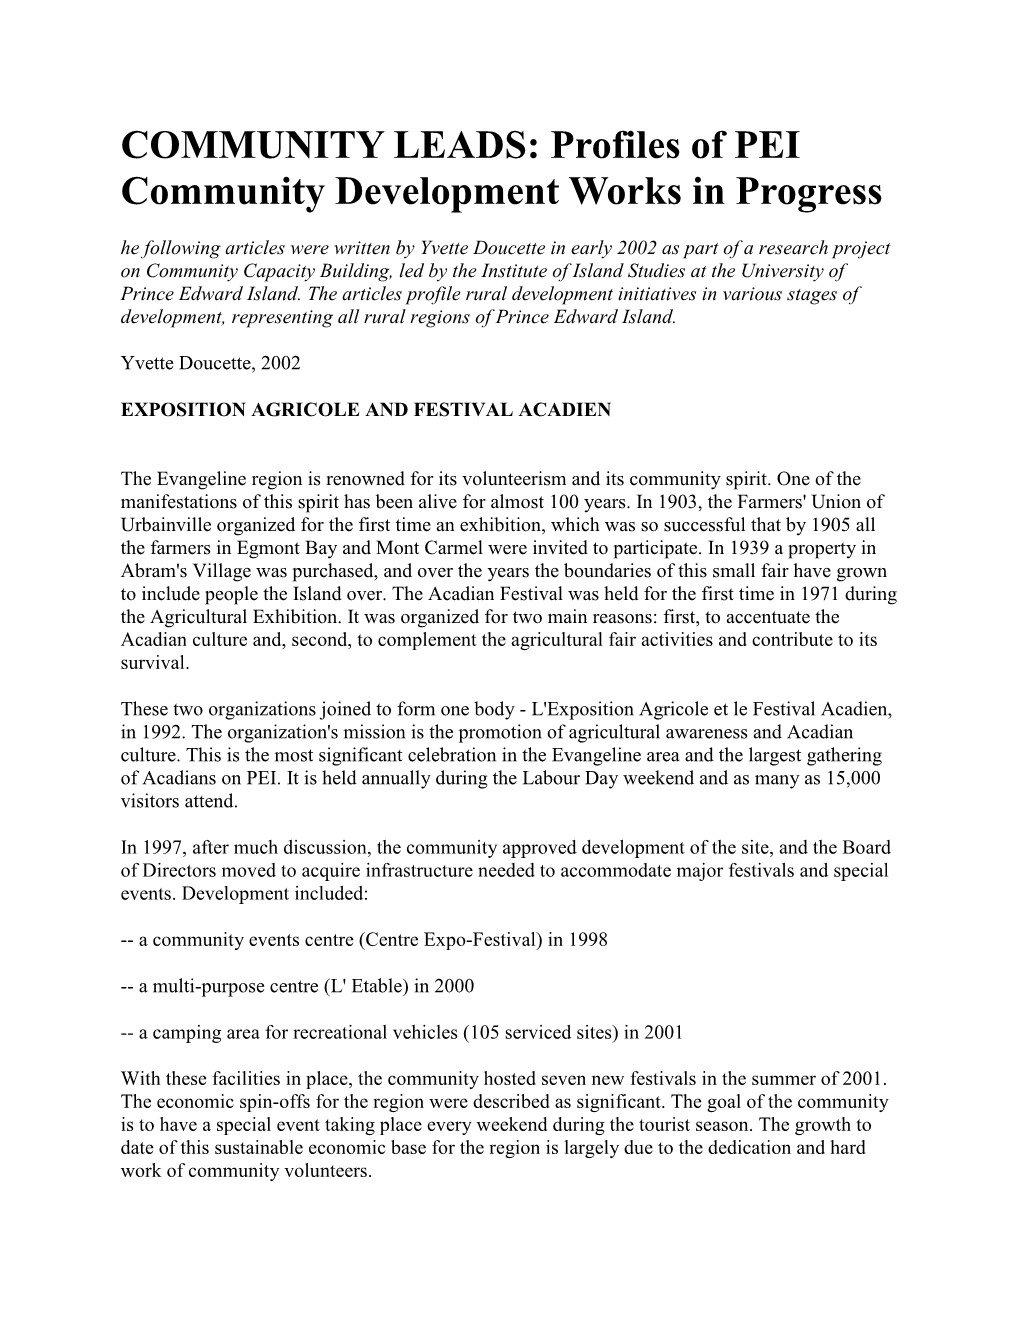 COMMUNITY LEADS: Profiles of PEI Community Development Works in Progress